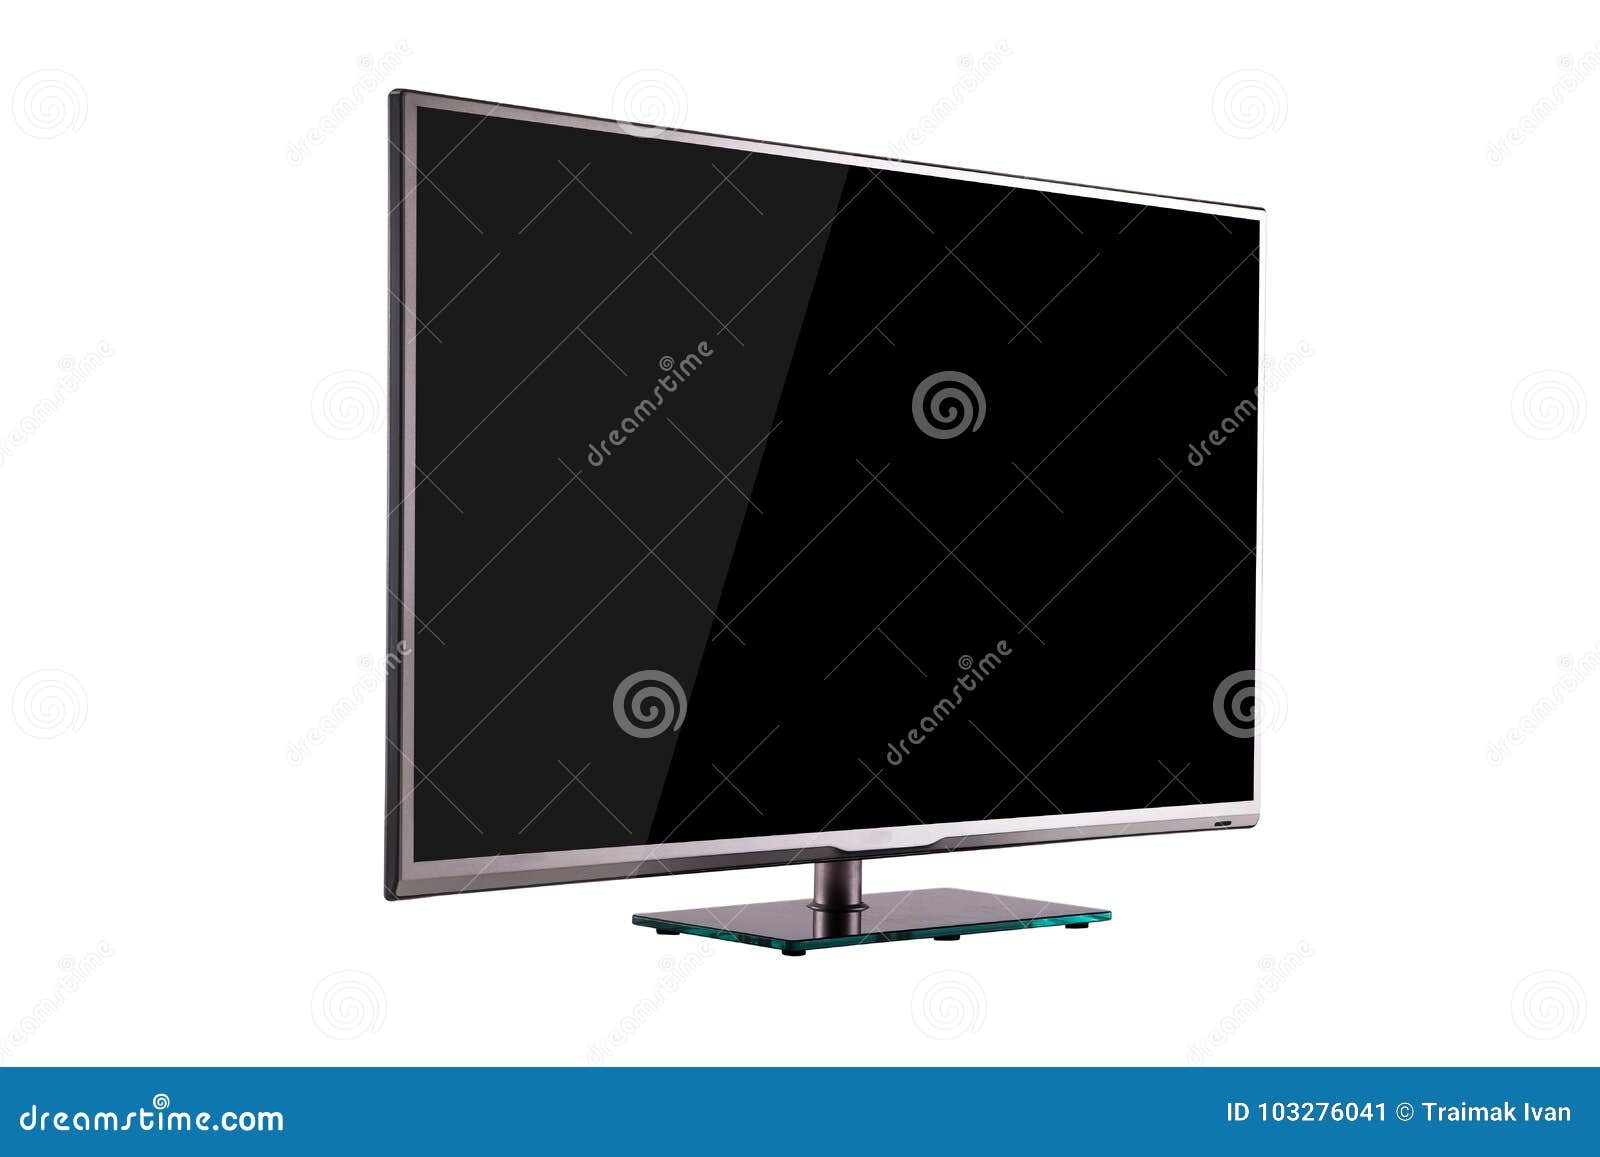 modern thin plasma lcd tv on a silver black glass stand 